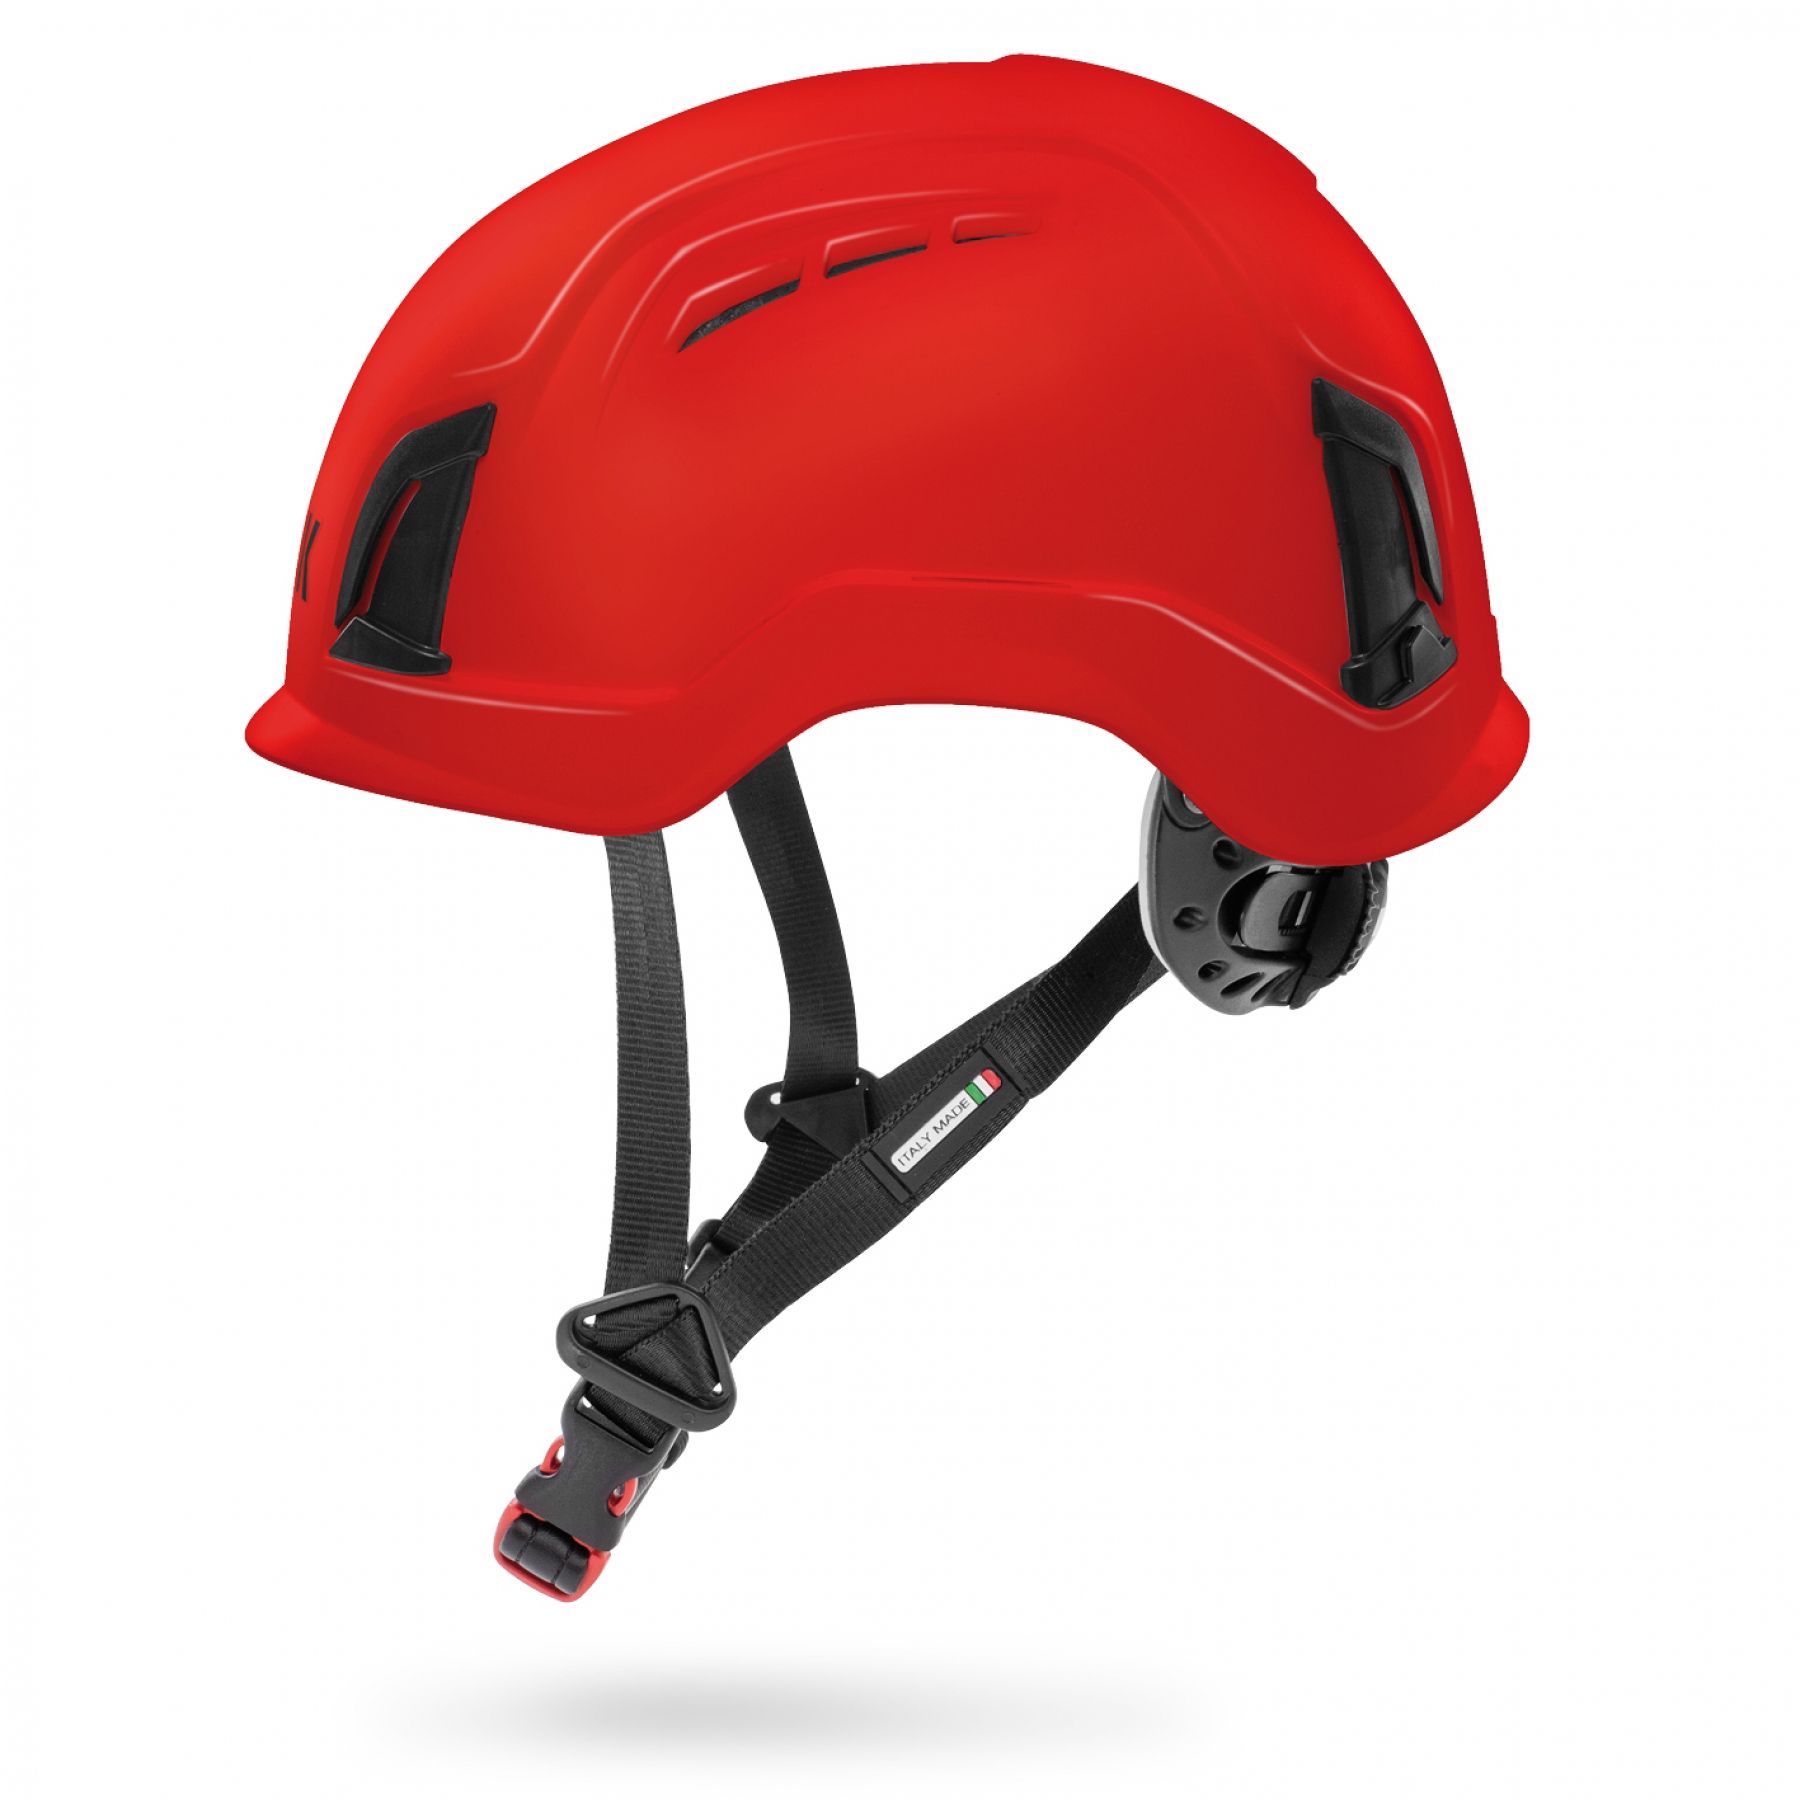 ORANGE EN12492 KASK ZENITH PL Work Safety Climbing Helmet 